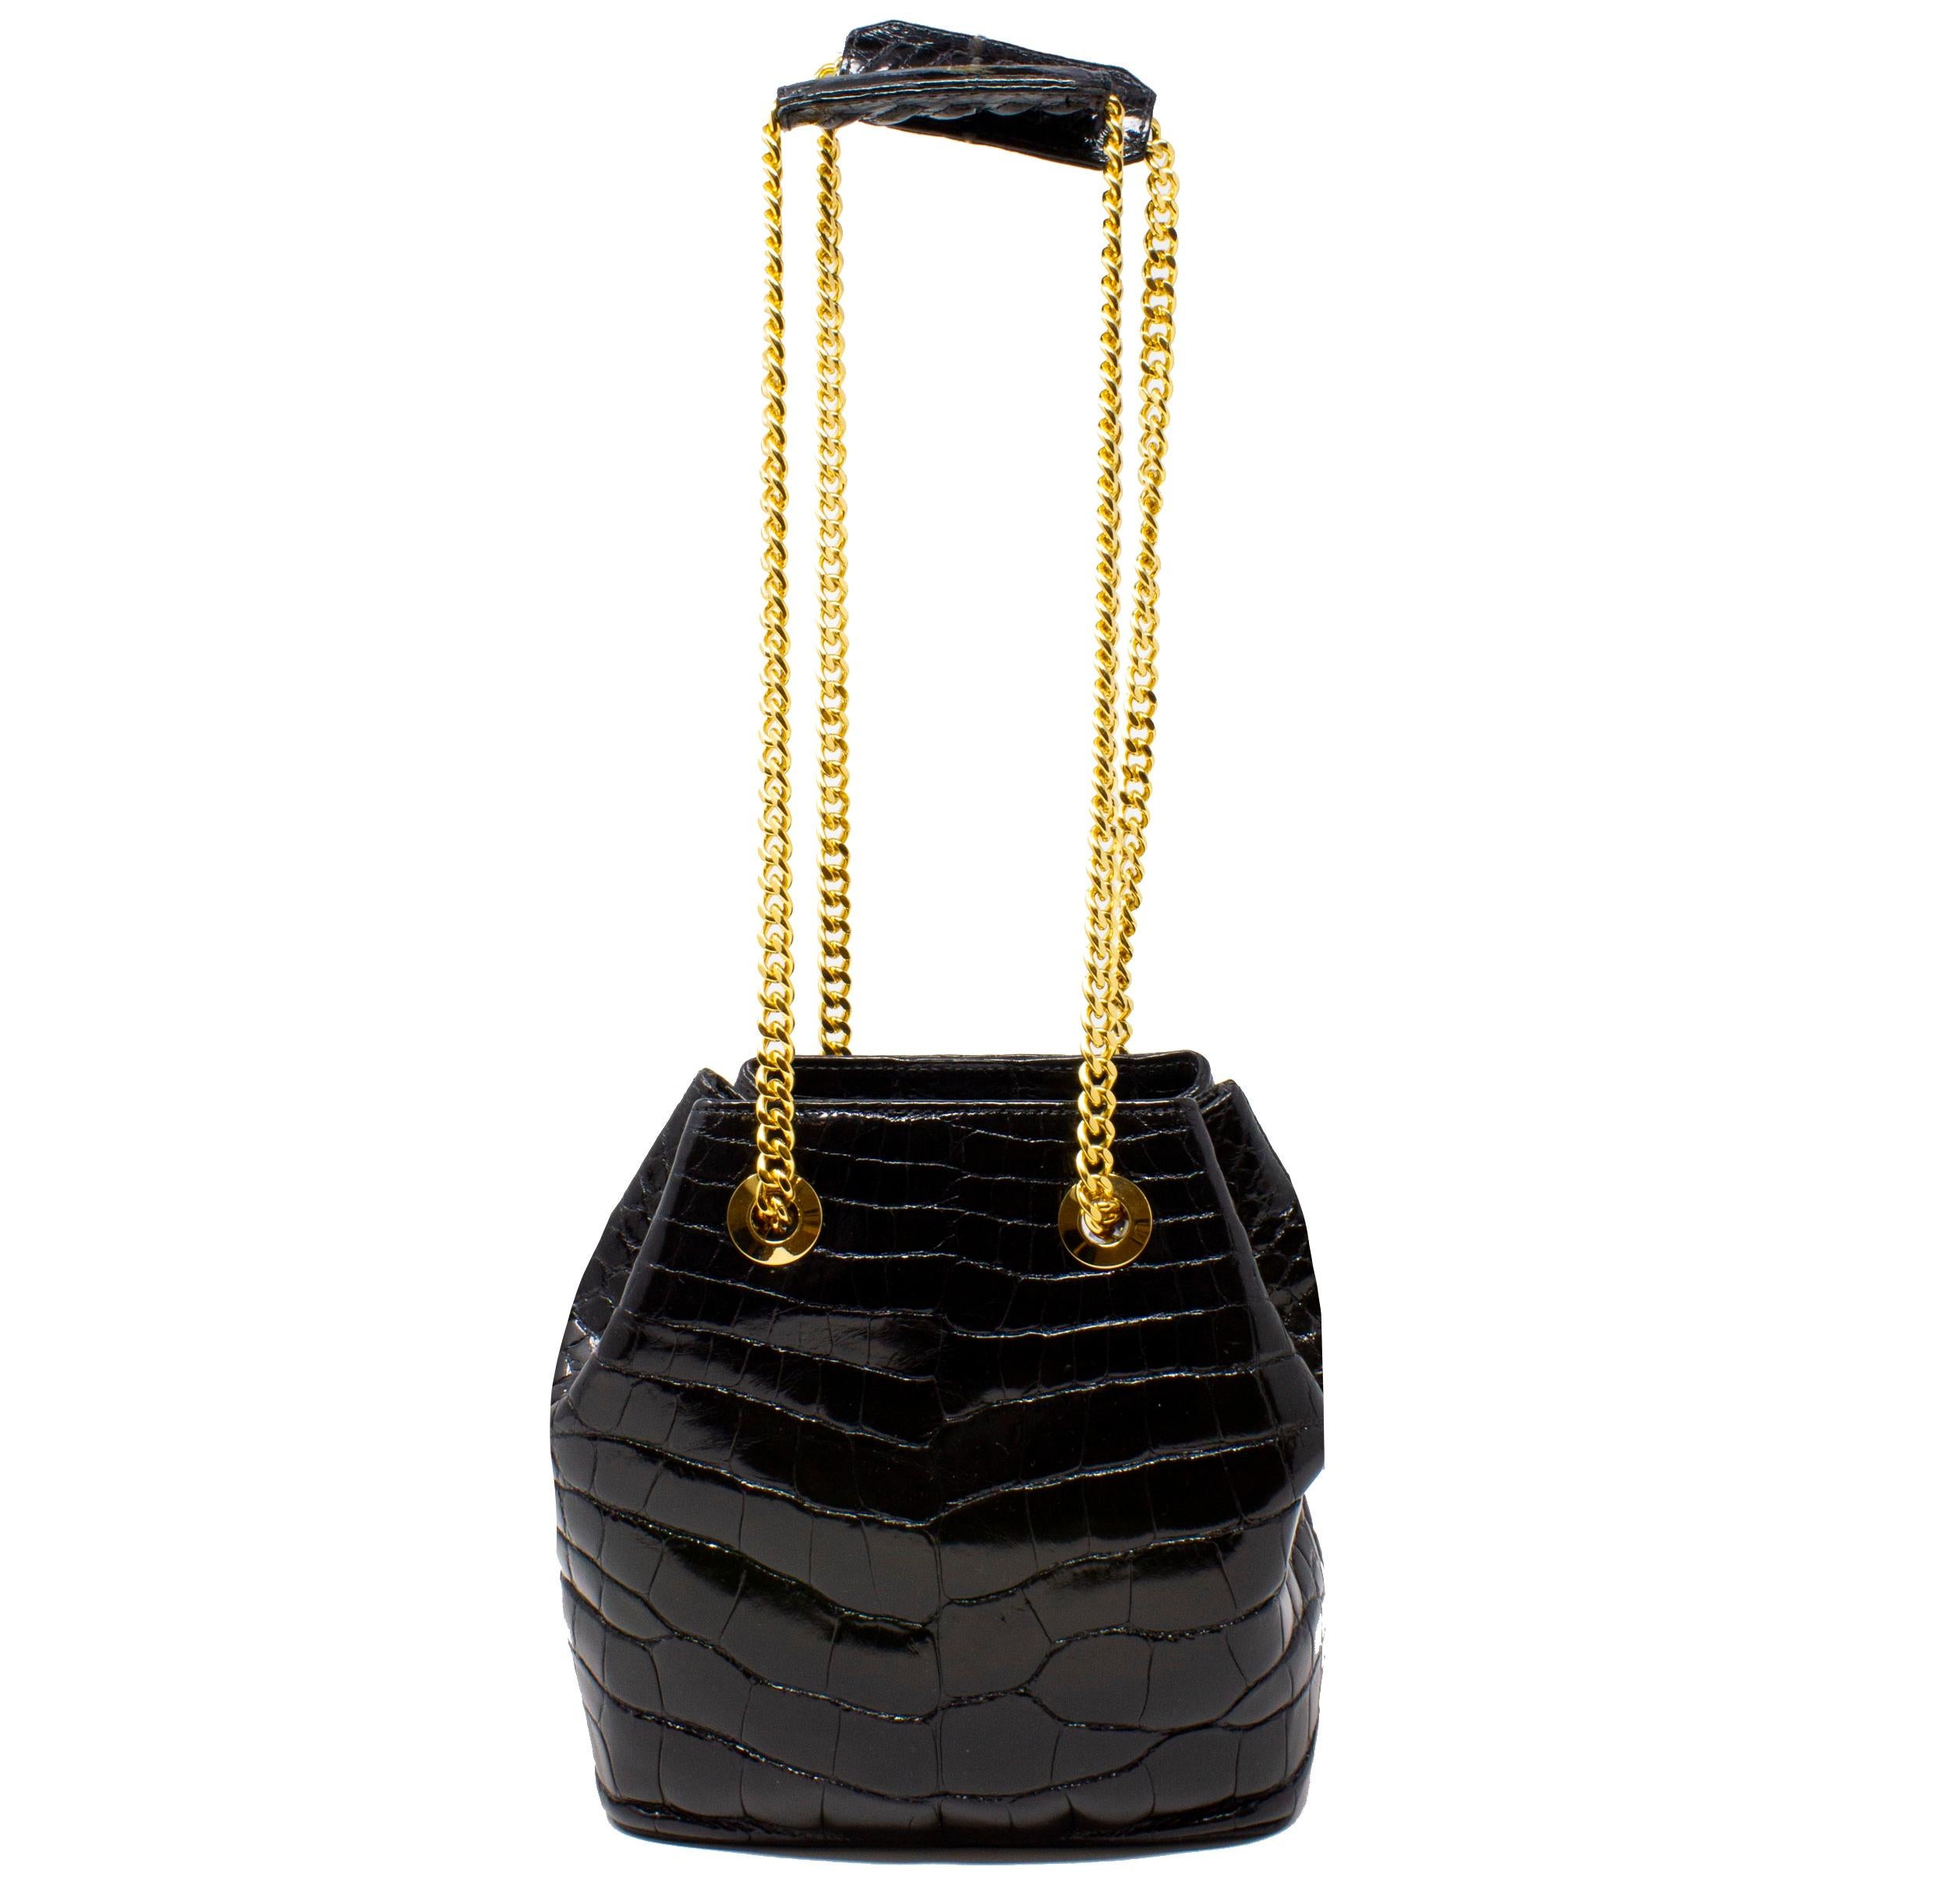 Stalvey Jessica Black Crocodile Bucket Bag In Excellent Condition For Sale In Atlanta, GA